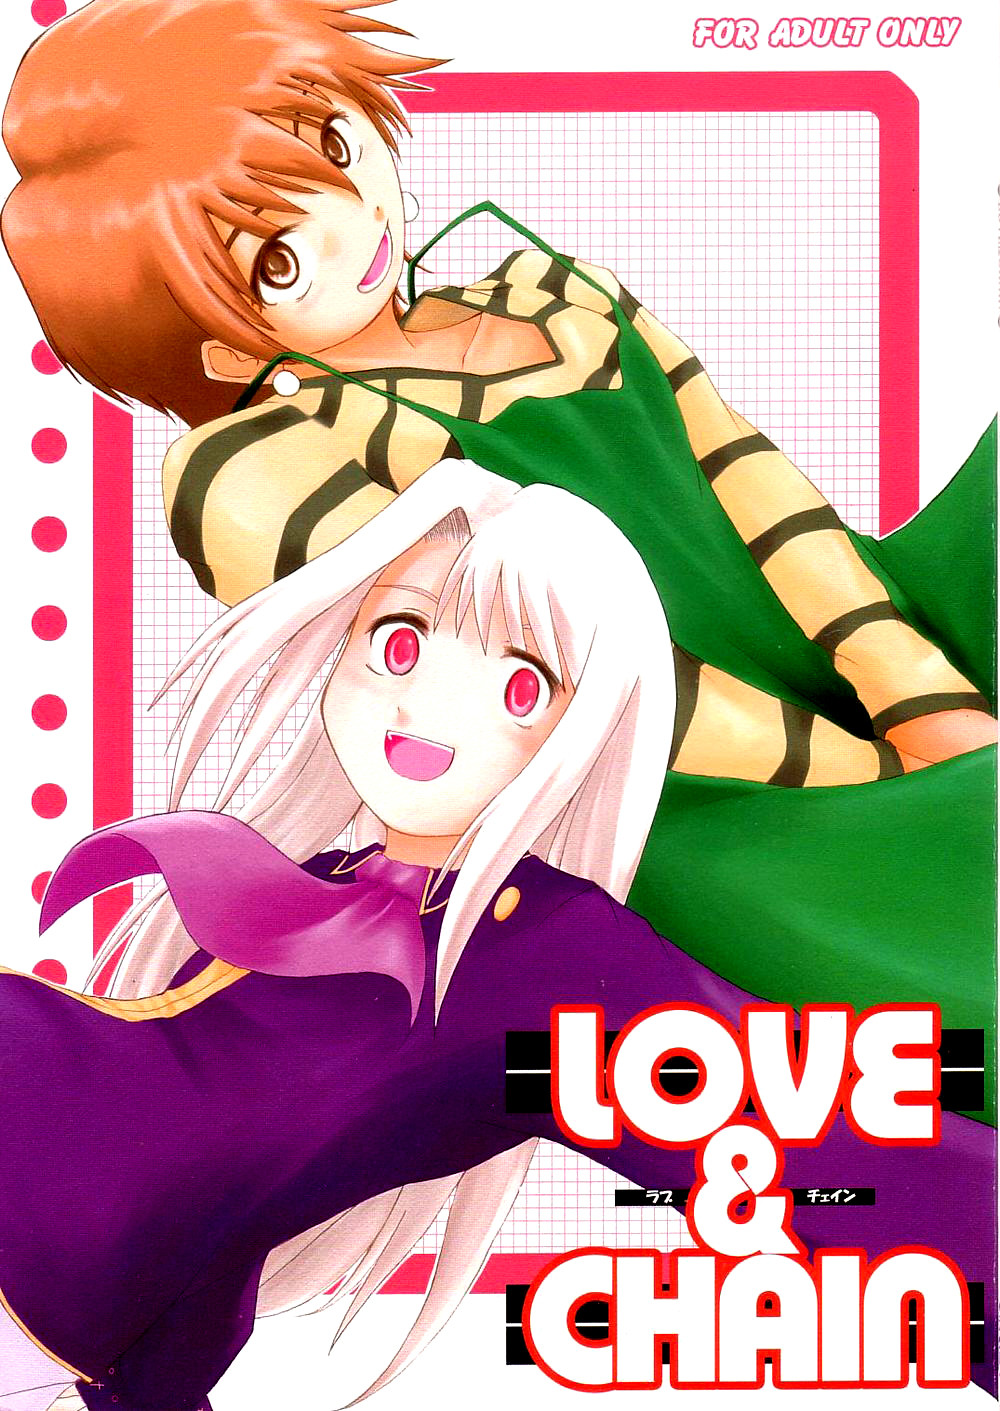 Hentai Manga Comic-LOVE & CHAIN-v22m-Read-1